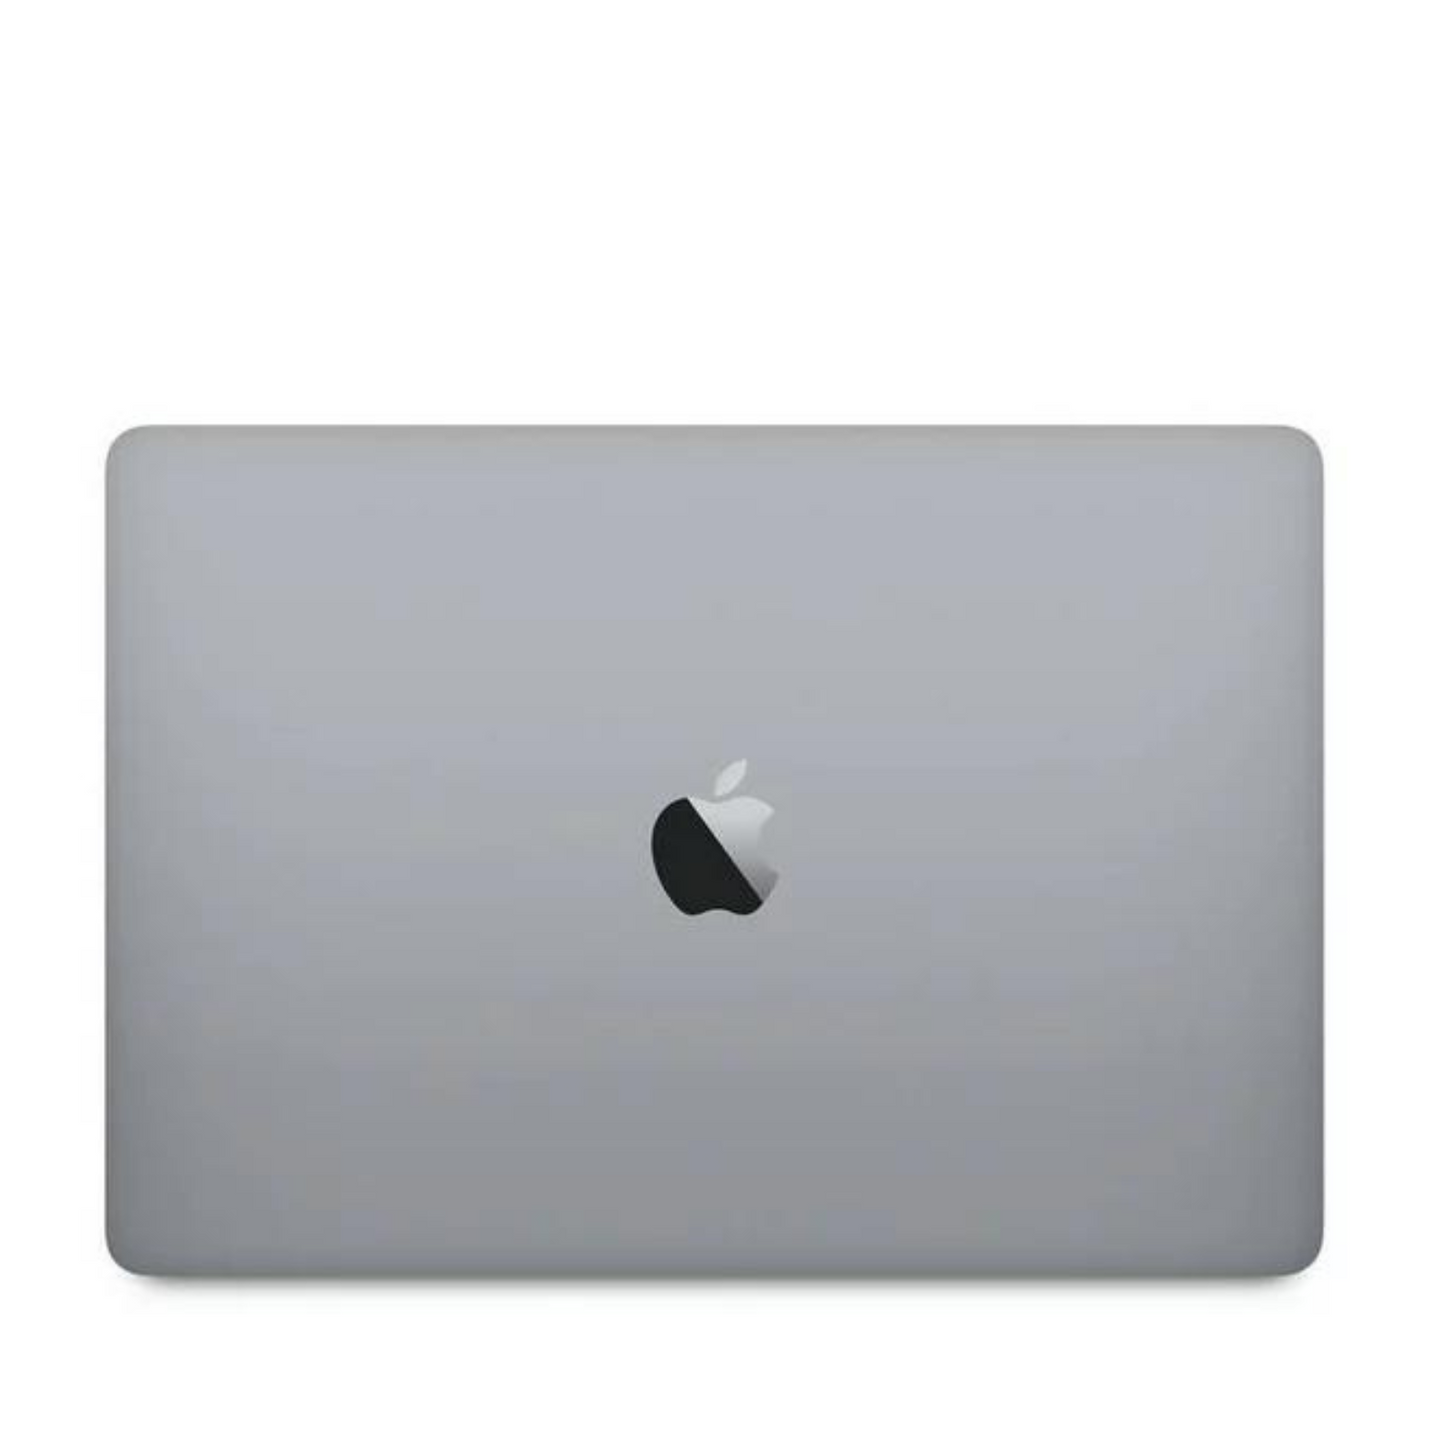 MacBook Pro (15-inch, 2017) Intel Core i7 - 16 GB RAM - Radeon Pro 555 with 2 GB - macOS Ventura